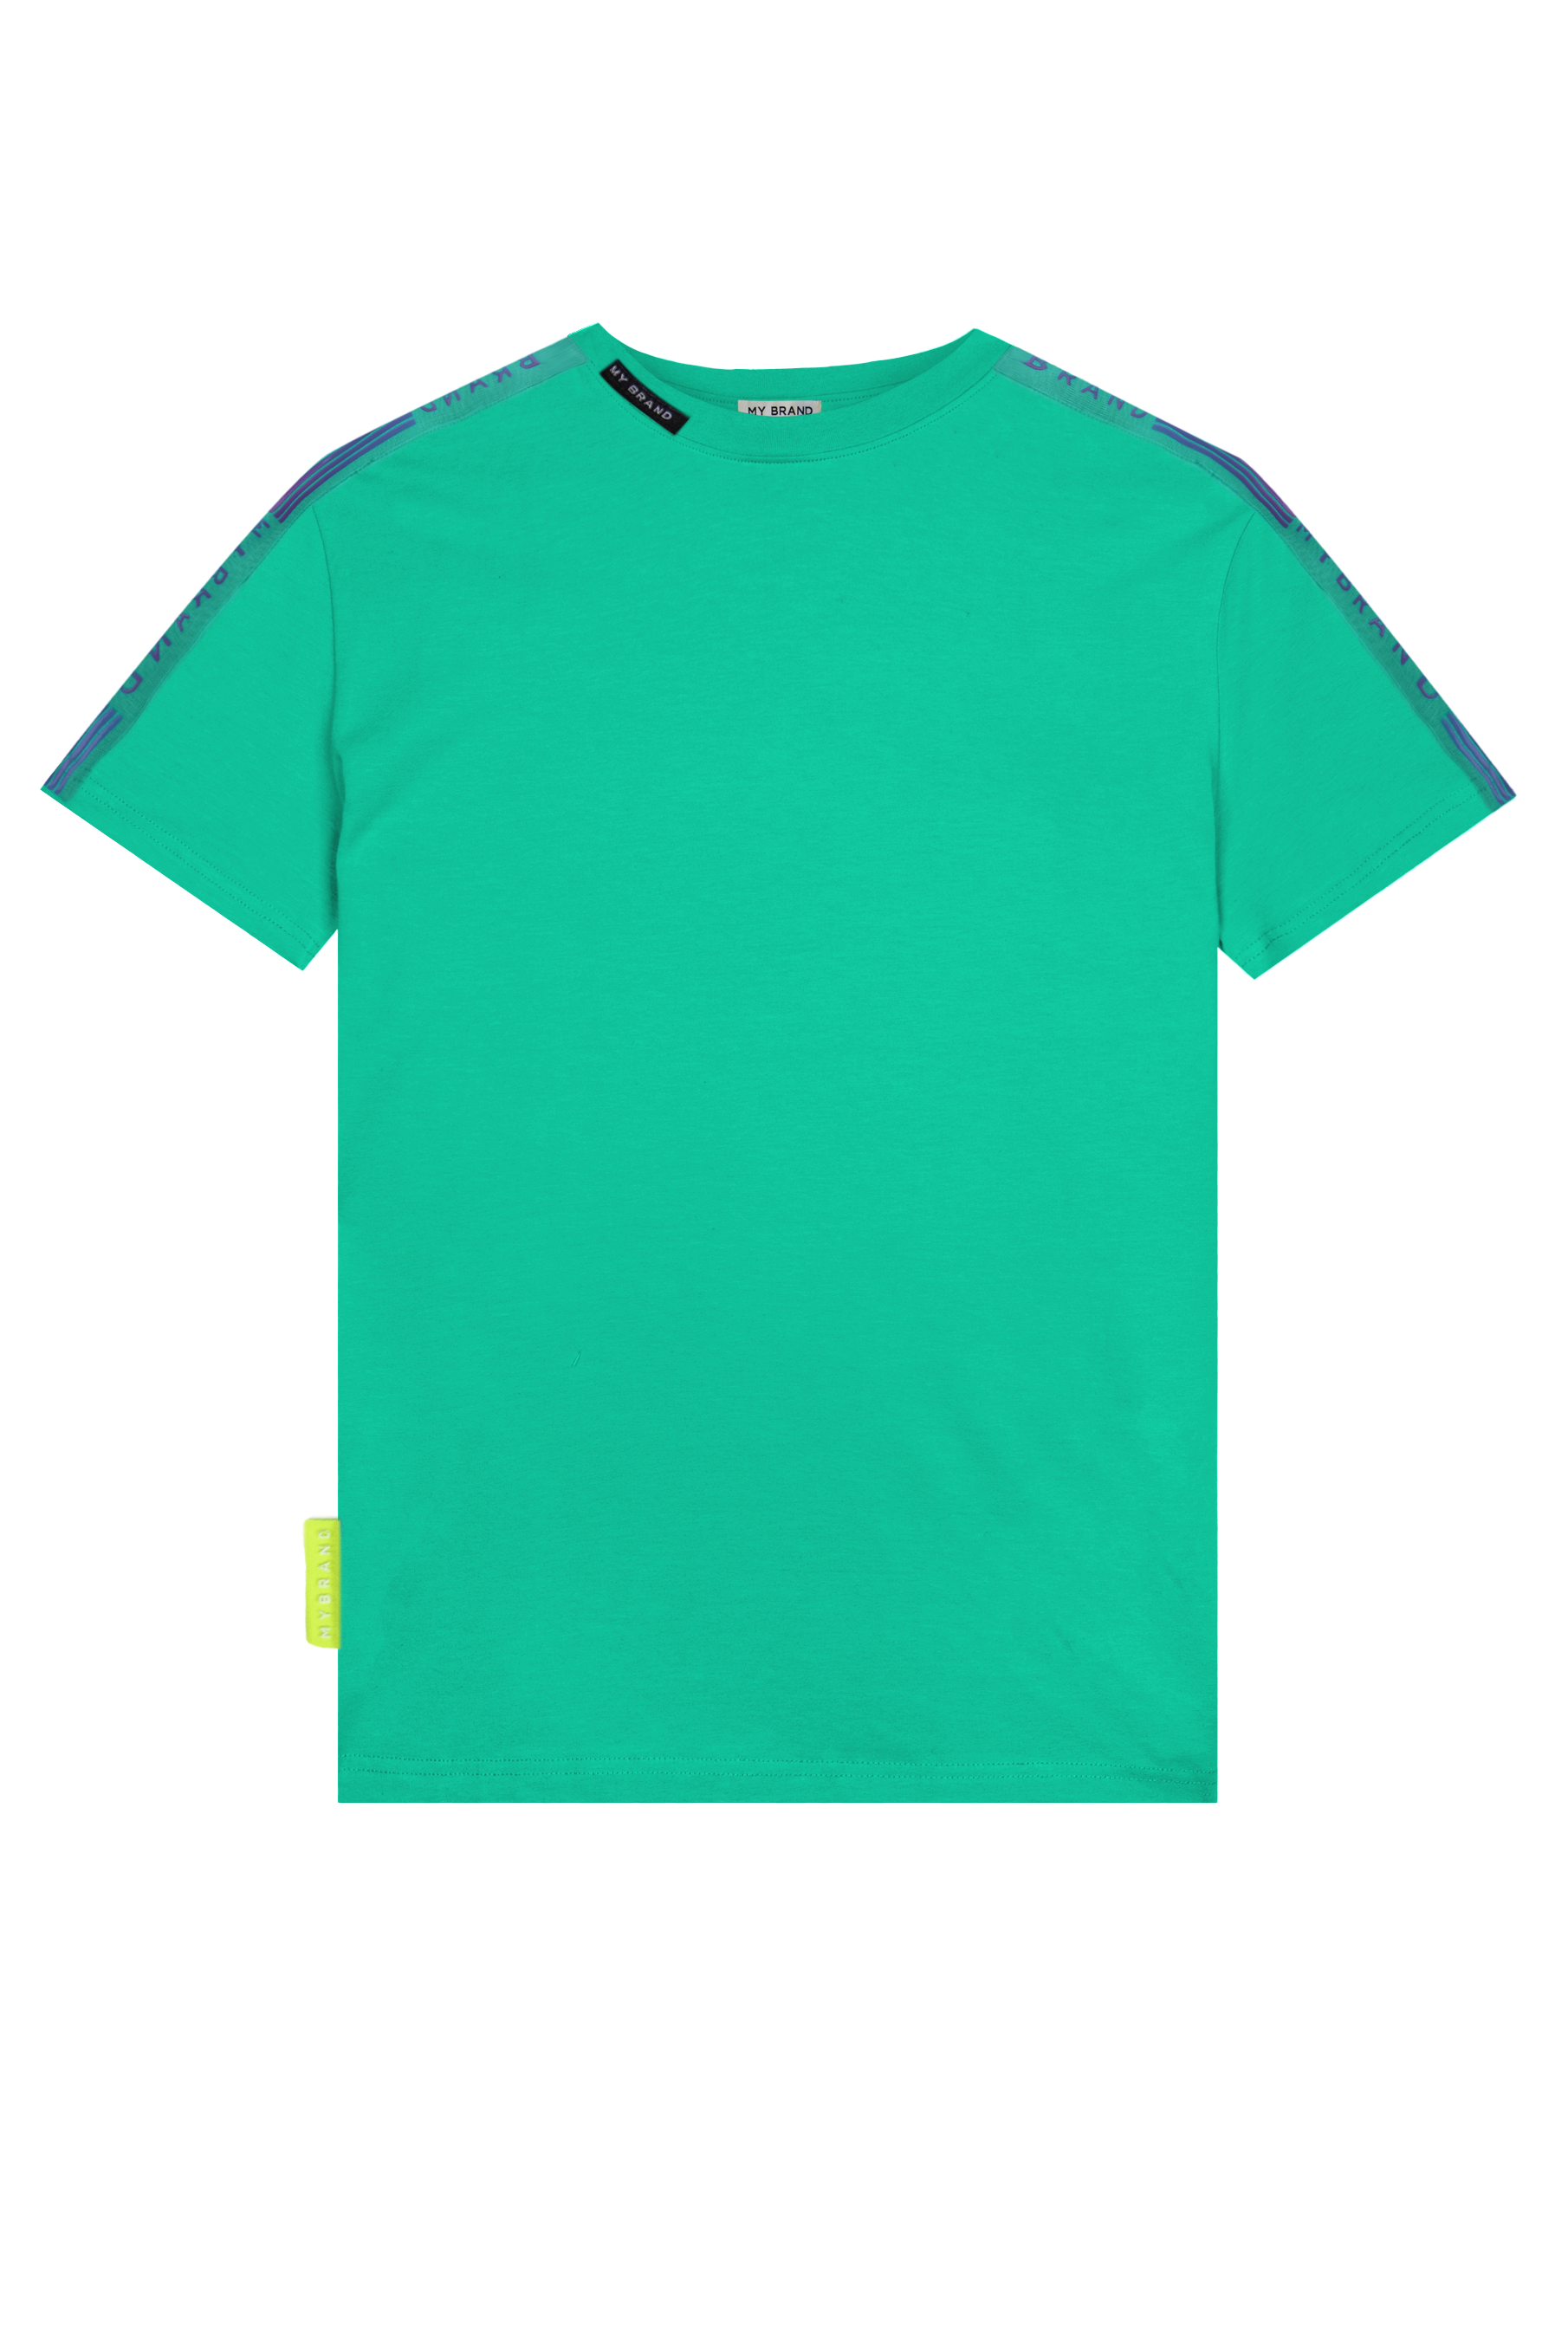 MB Gradient T-Shirt Aquasplash